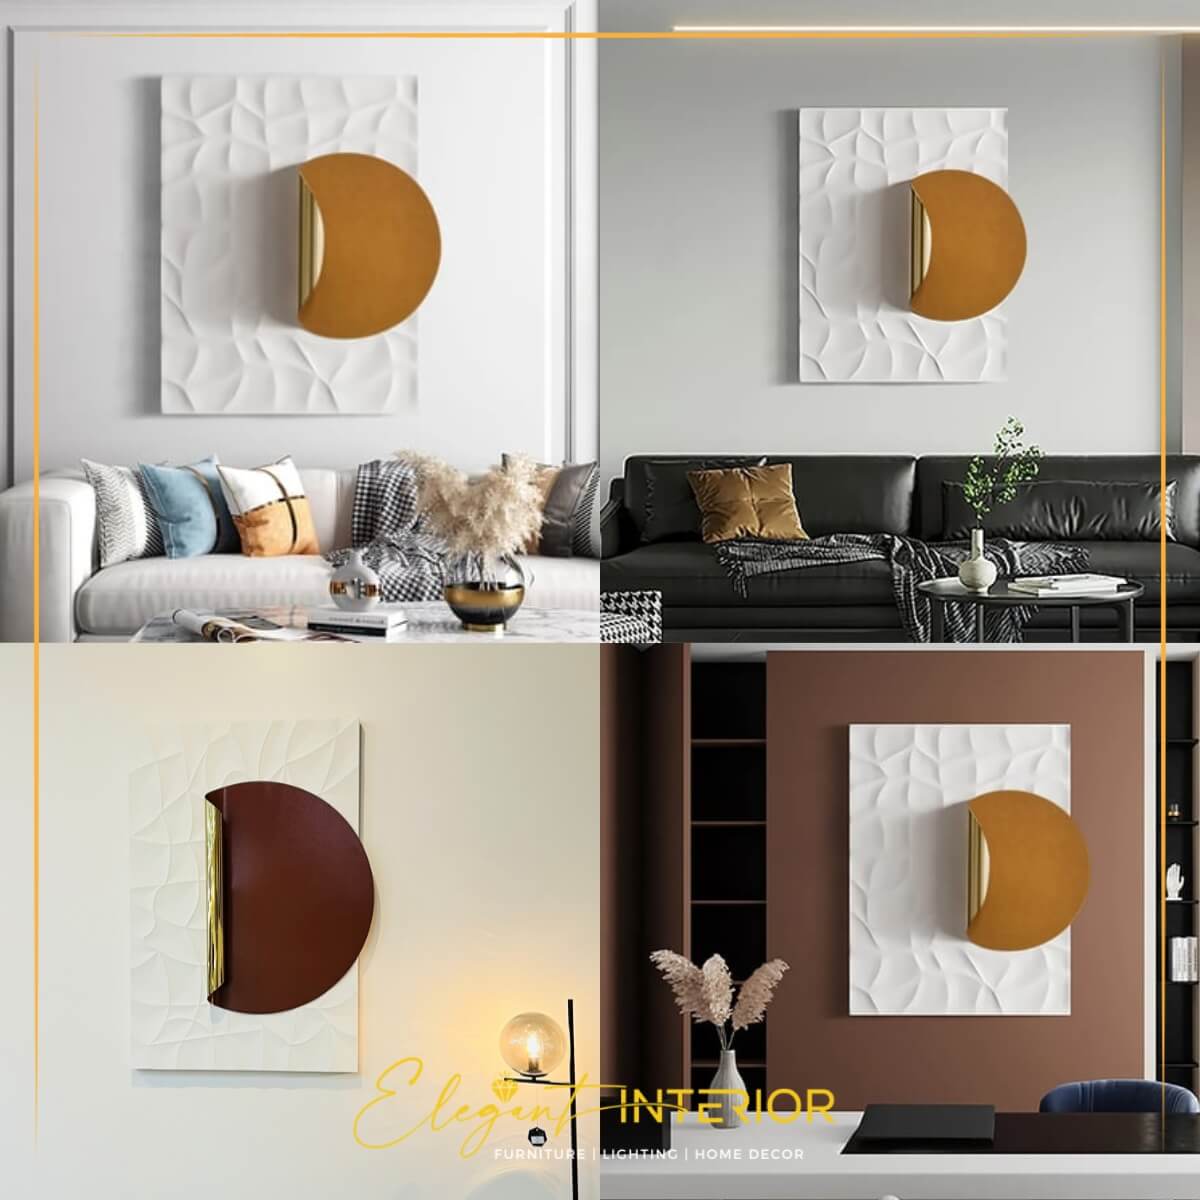 Eclipse-Modern Orange Rectangle Wall Decor Background Creative 3D Geometric Wall Art (Custom made)